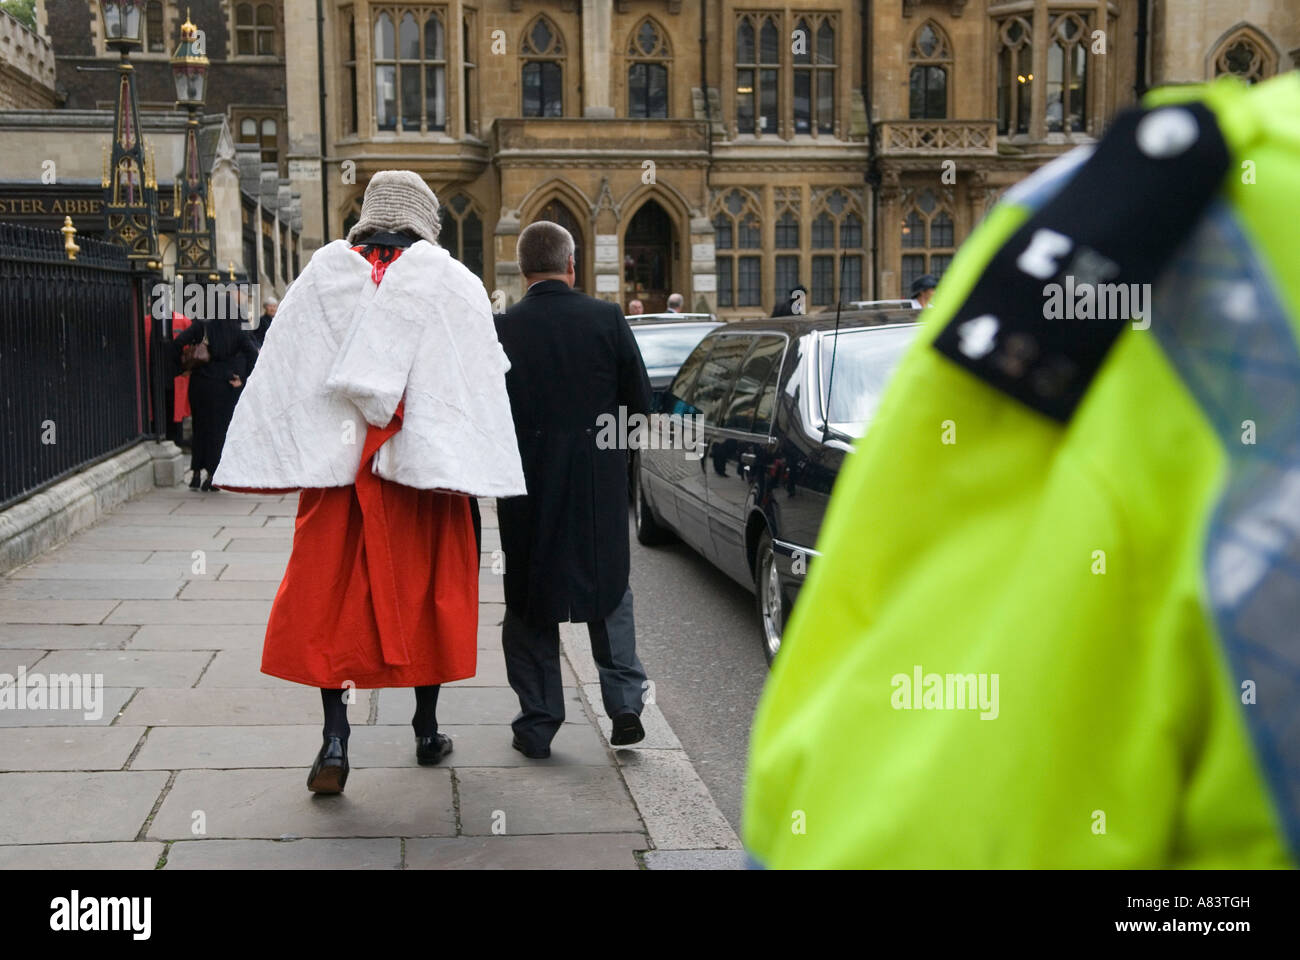 Lord Chancellors Breakfast, ein Richter am High Court, kommt in Westminster Abbey an, ein diensthabender Polizist London England 2006 2000s UK HOMER SYKES Stockfoto